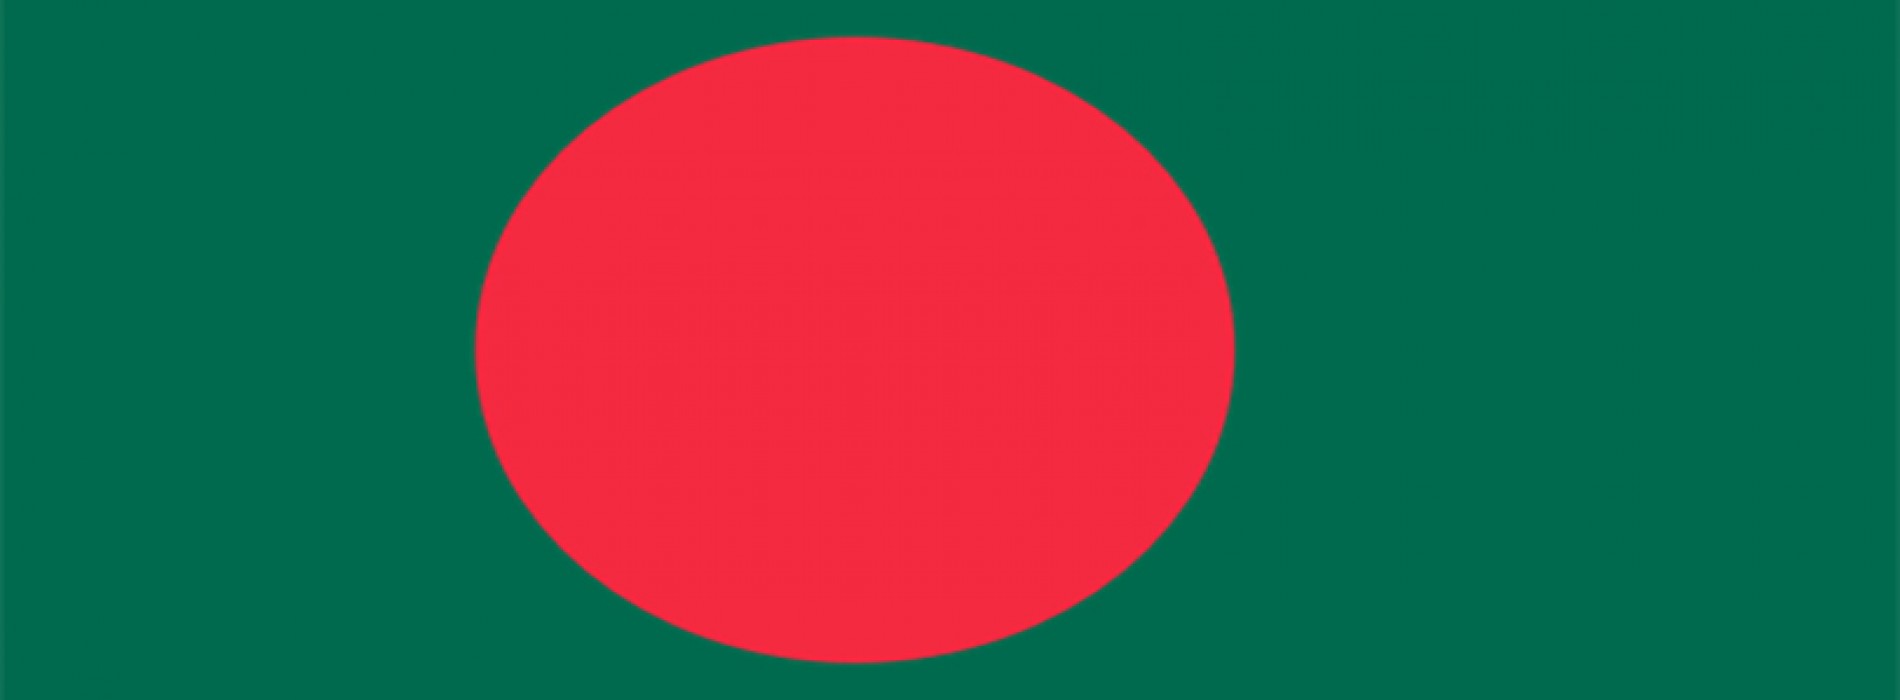 Bangladesh Visa